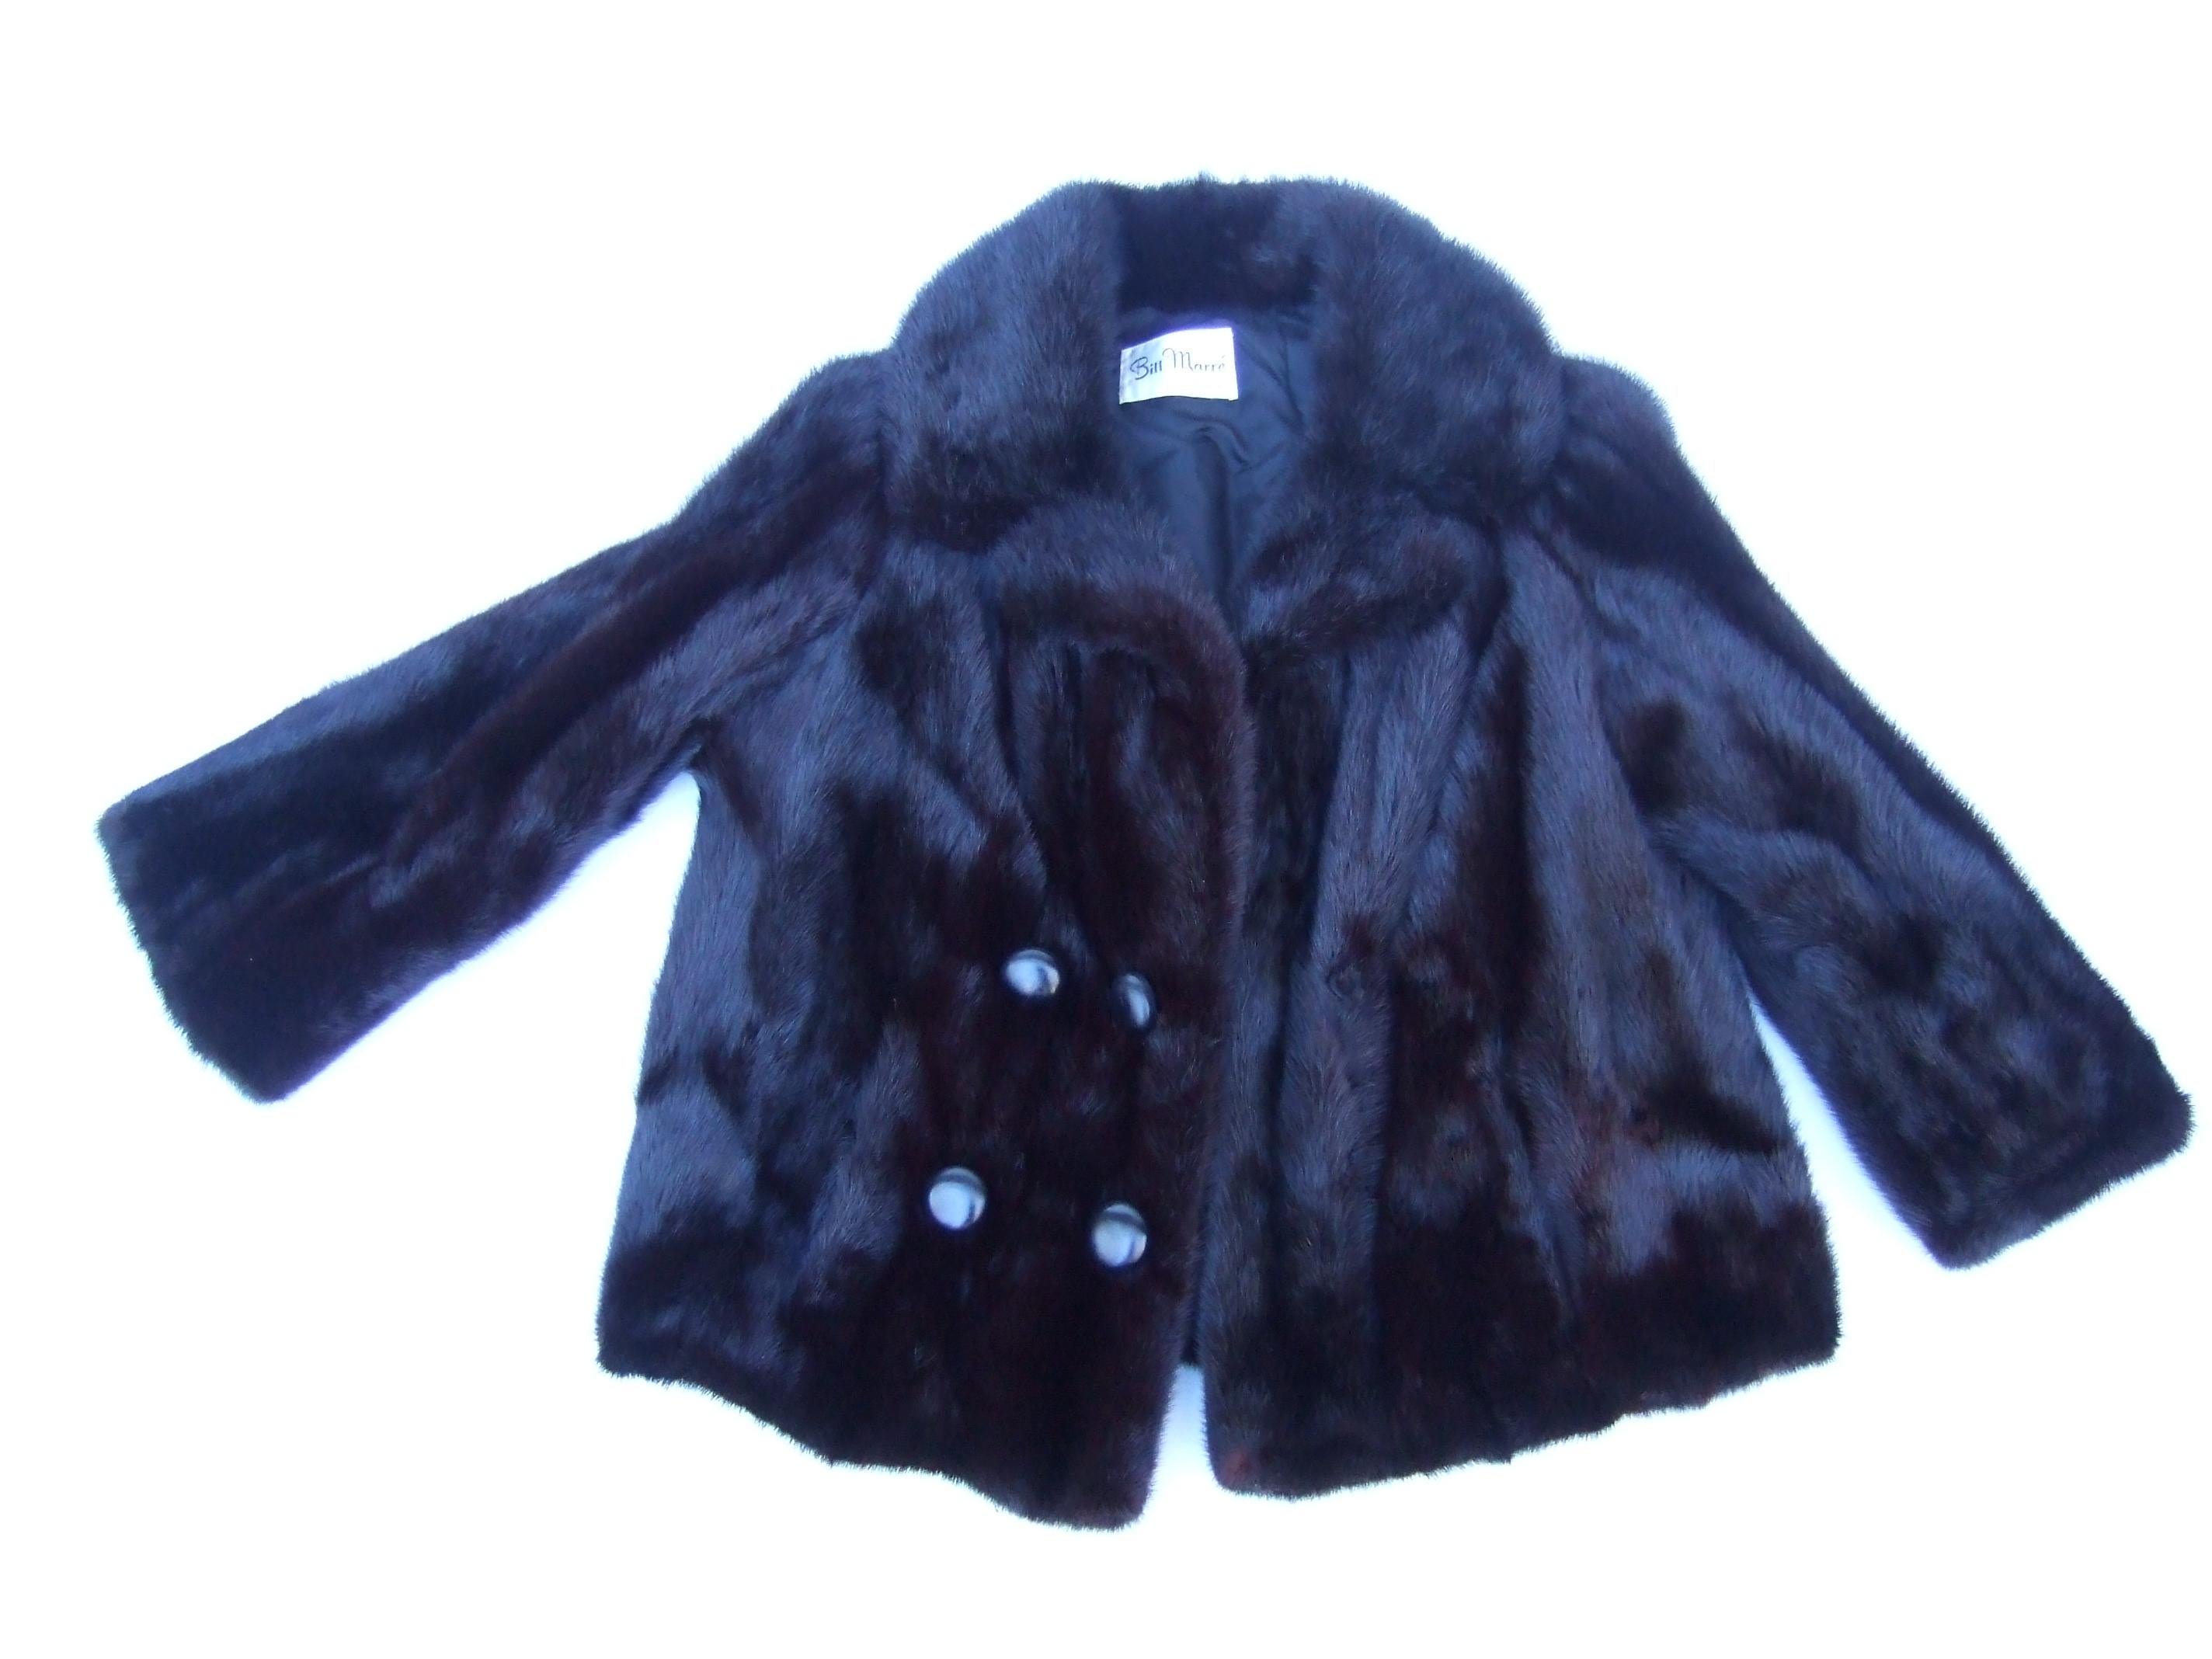 Luxurious Mahogany Plush Dark Brown Mink Fur Jacket by Bill Marre' c 1970s  11